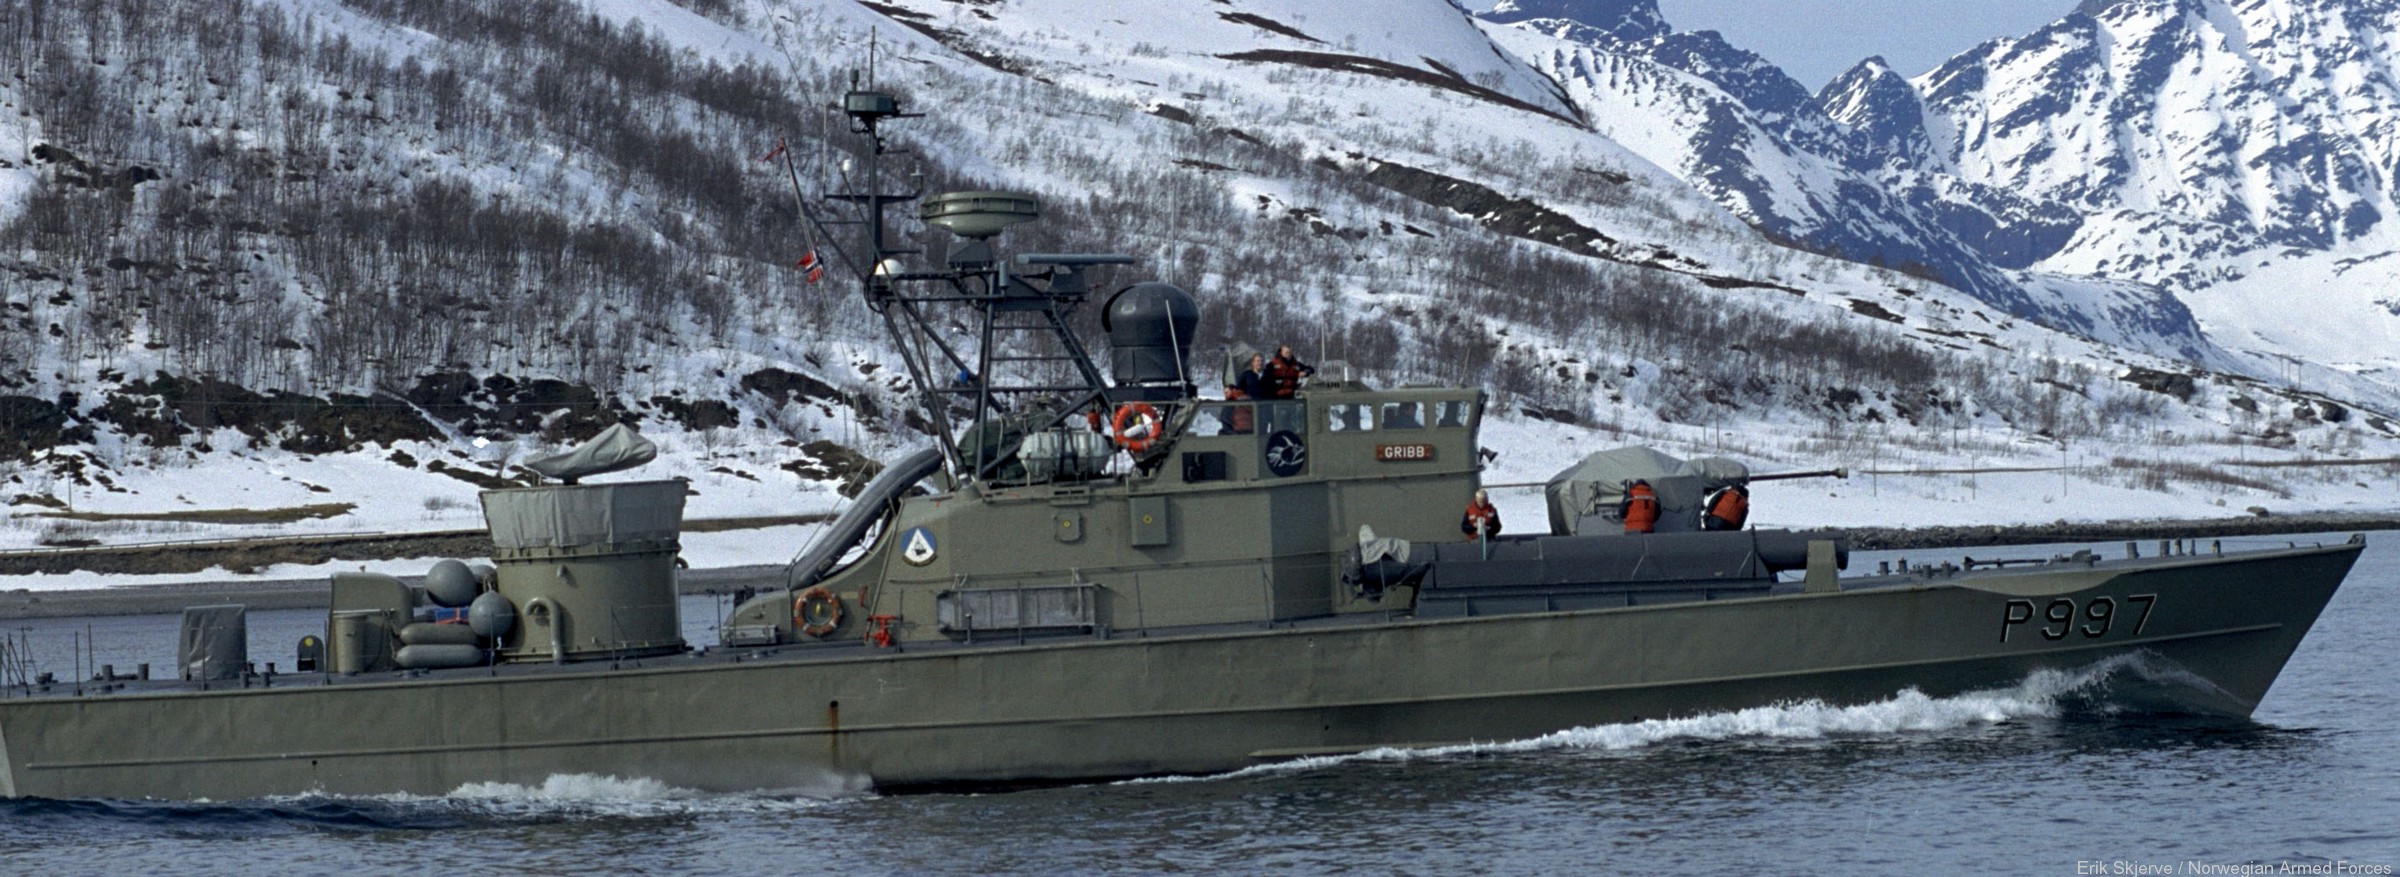 p-997 knm gribb hauk class fast attack missile torpedo craft boat norwegian navy sjøforsvaret 06